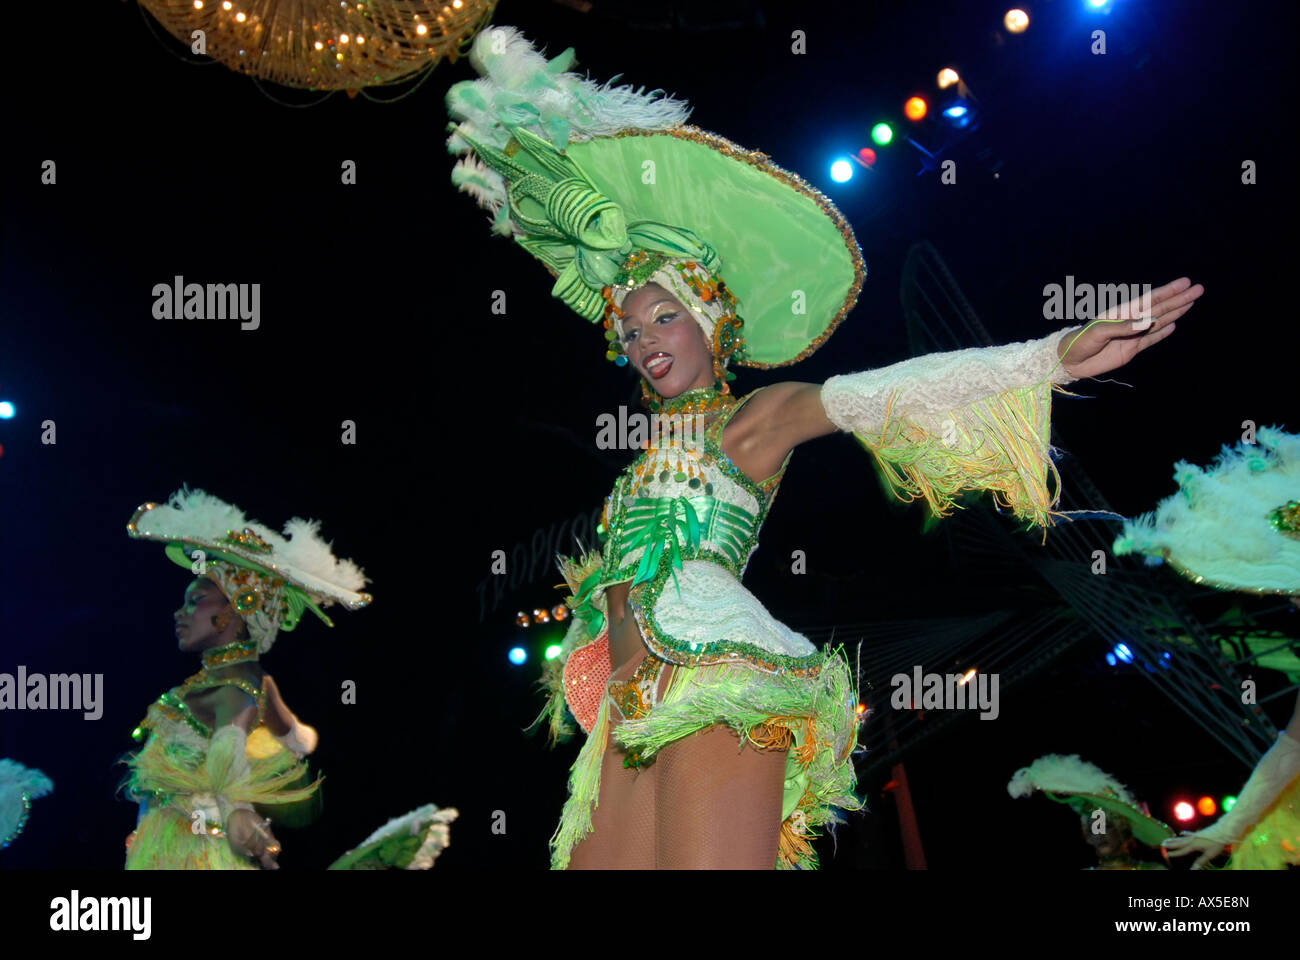 Young woman performing at a dance show, Tropicana nightclub in Havana, Cuba Stock Photo